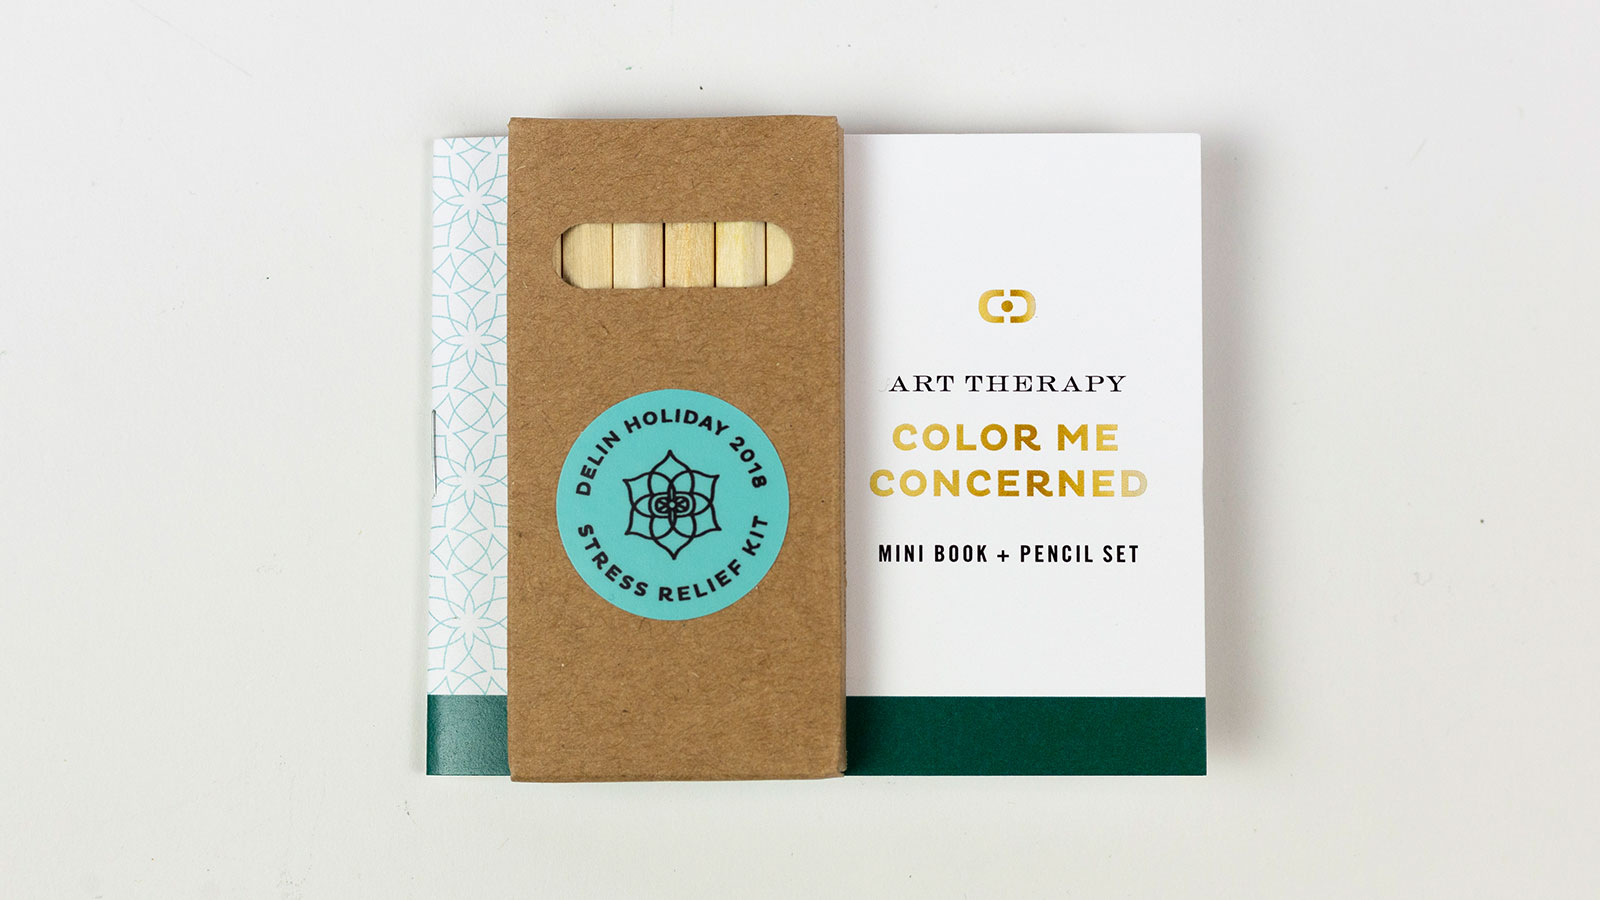 Delin Design Holiday 2018 Stress Kit Direct-Mail Promotion: "Color Me Concerned" Coloring Book + Pencil Set